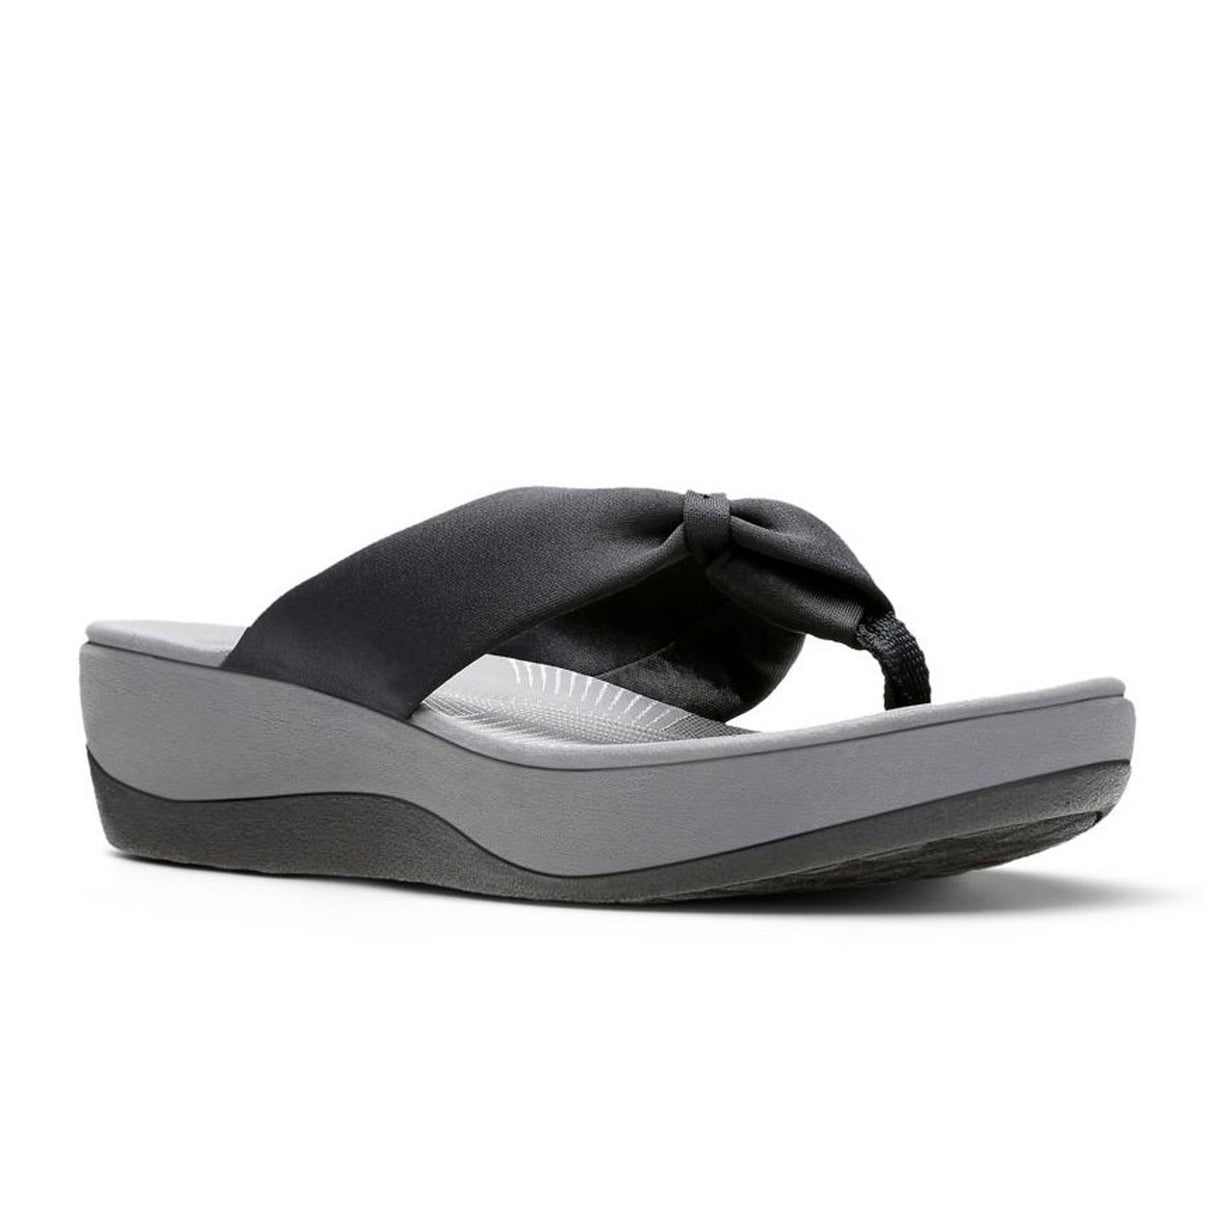 Clarks Arla Glison Thong Sandal (Women) - Black Fabric Sandals - Thong - The Heel Shoe Fitters